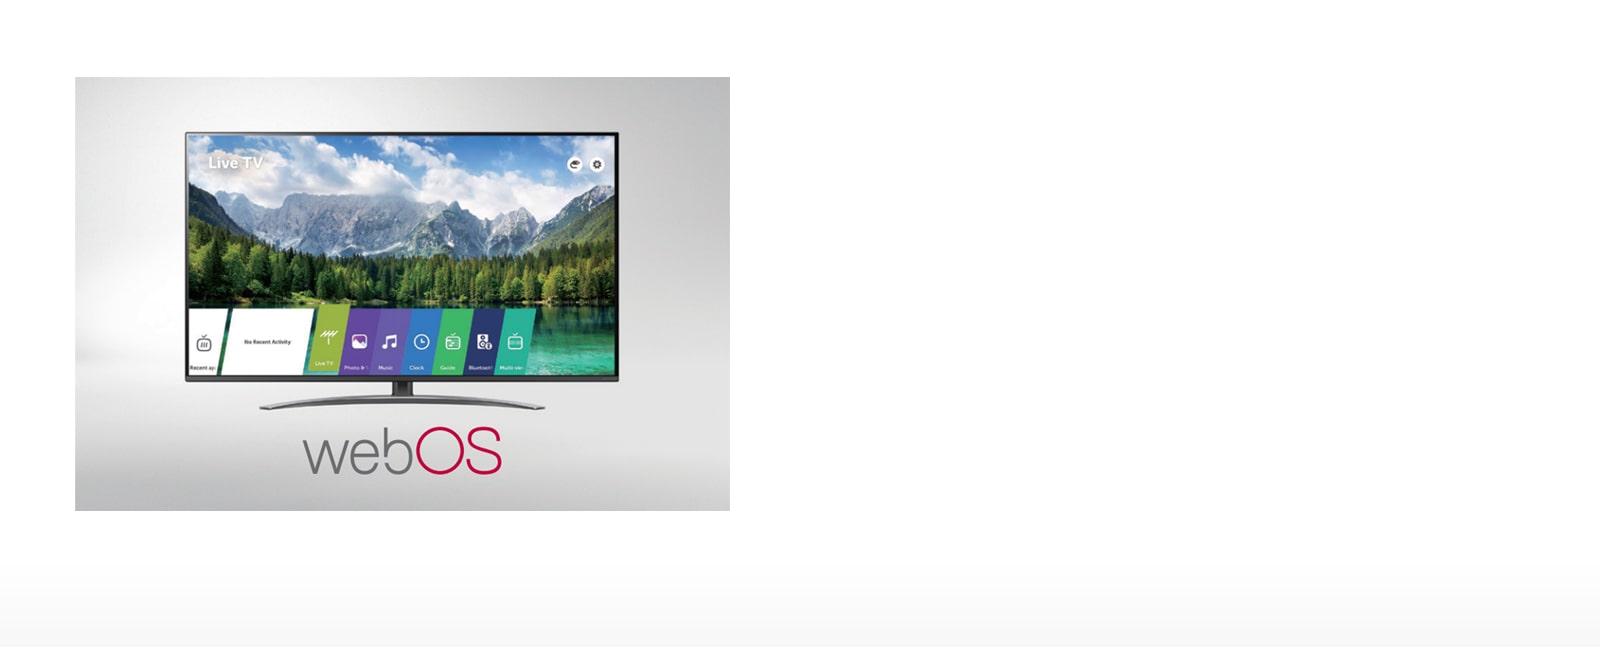 Smart TV bởi LG WebOS 4.51